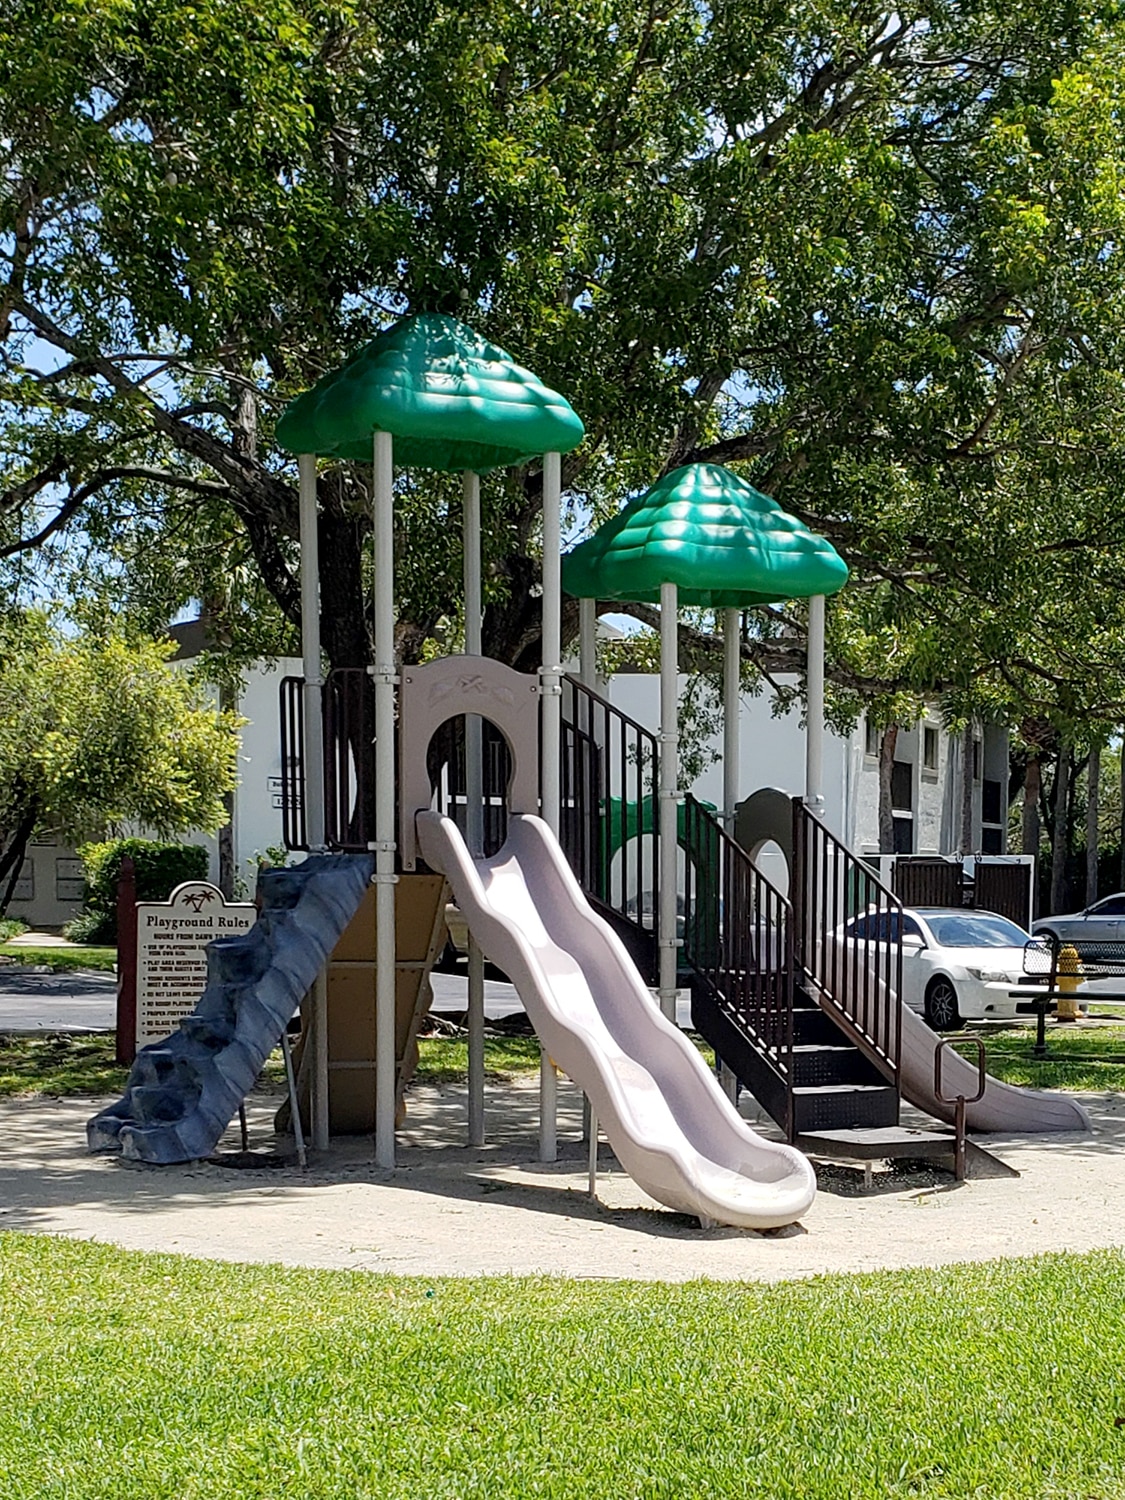 Playground with slide.